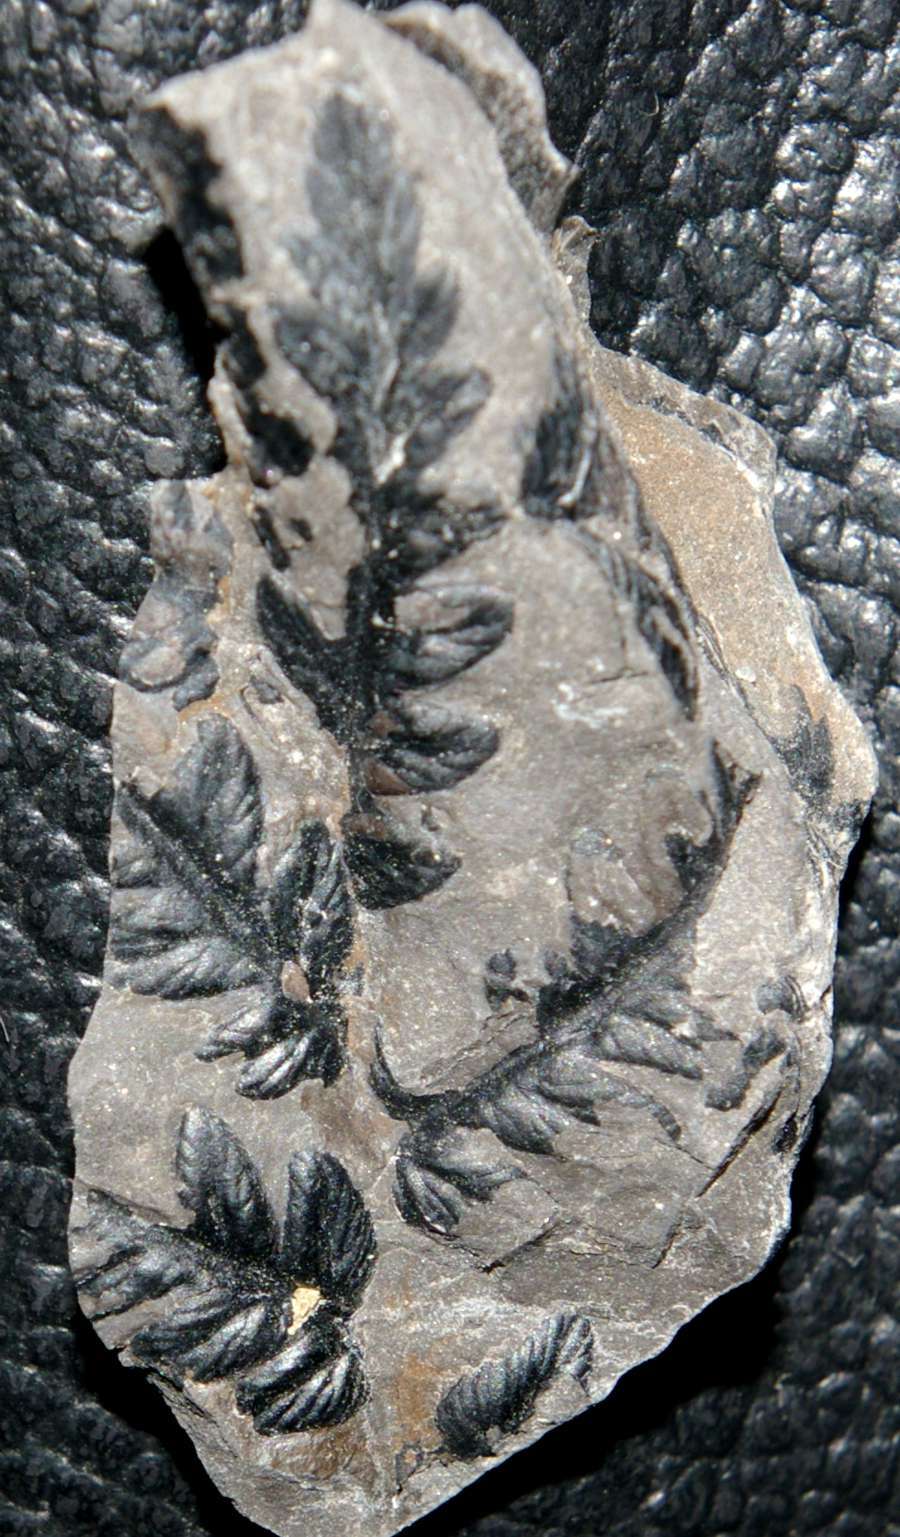 Pennsylvanian fossil tree fern